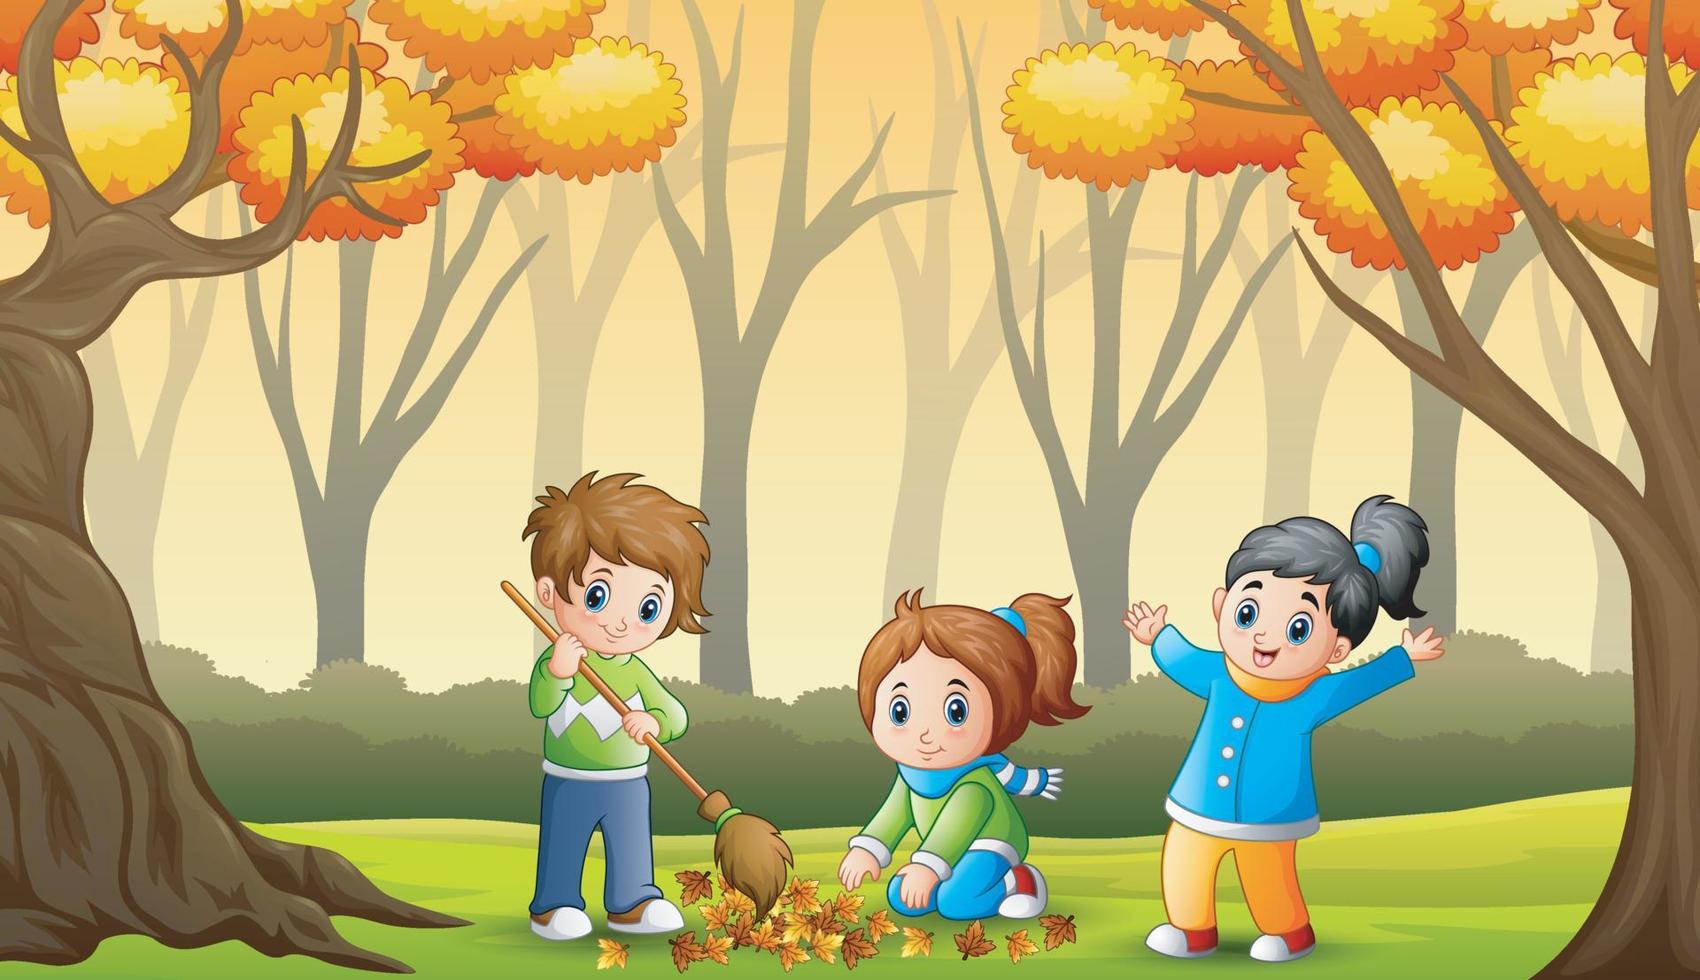 The children clean the fallen leaves in the garden vector